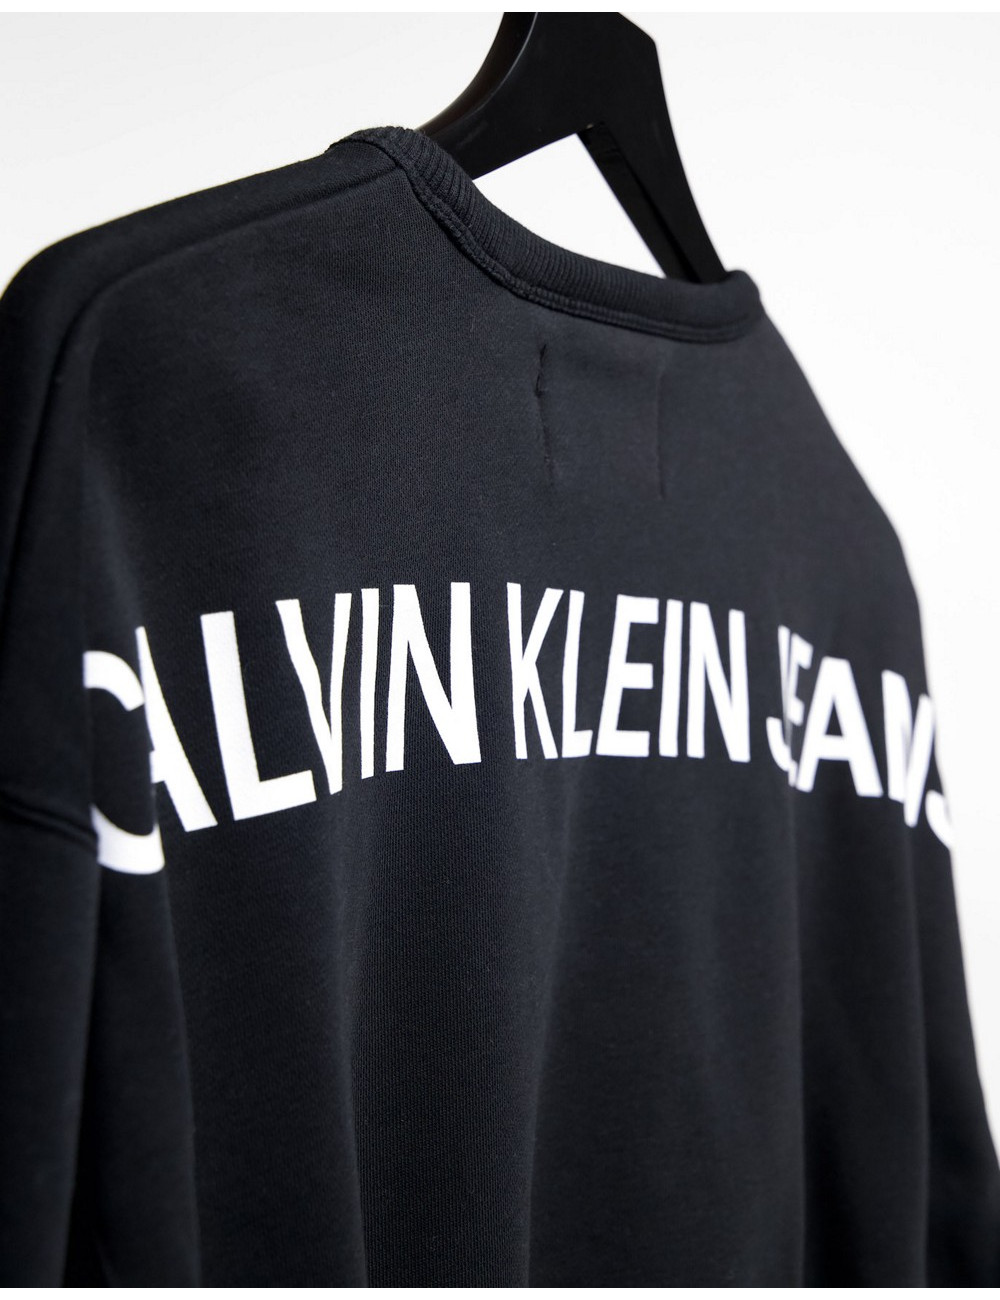 Calvin Klein Jeans back...